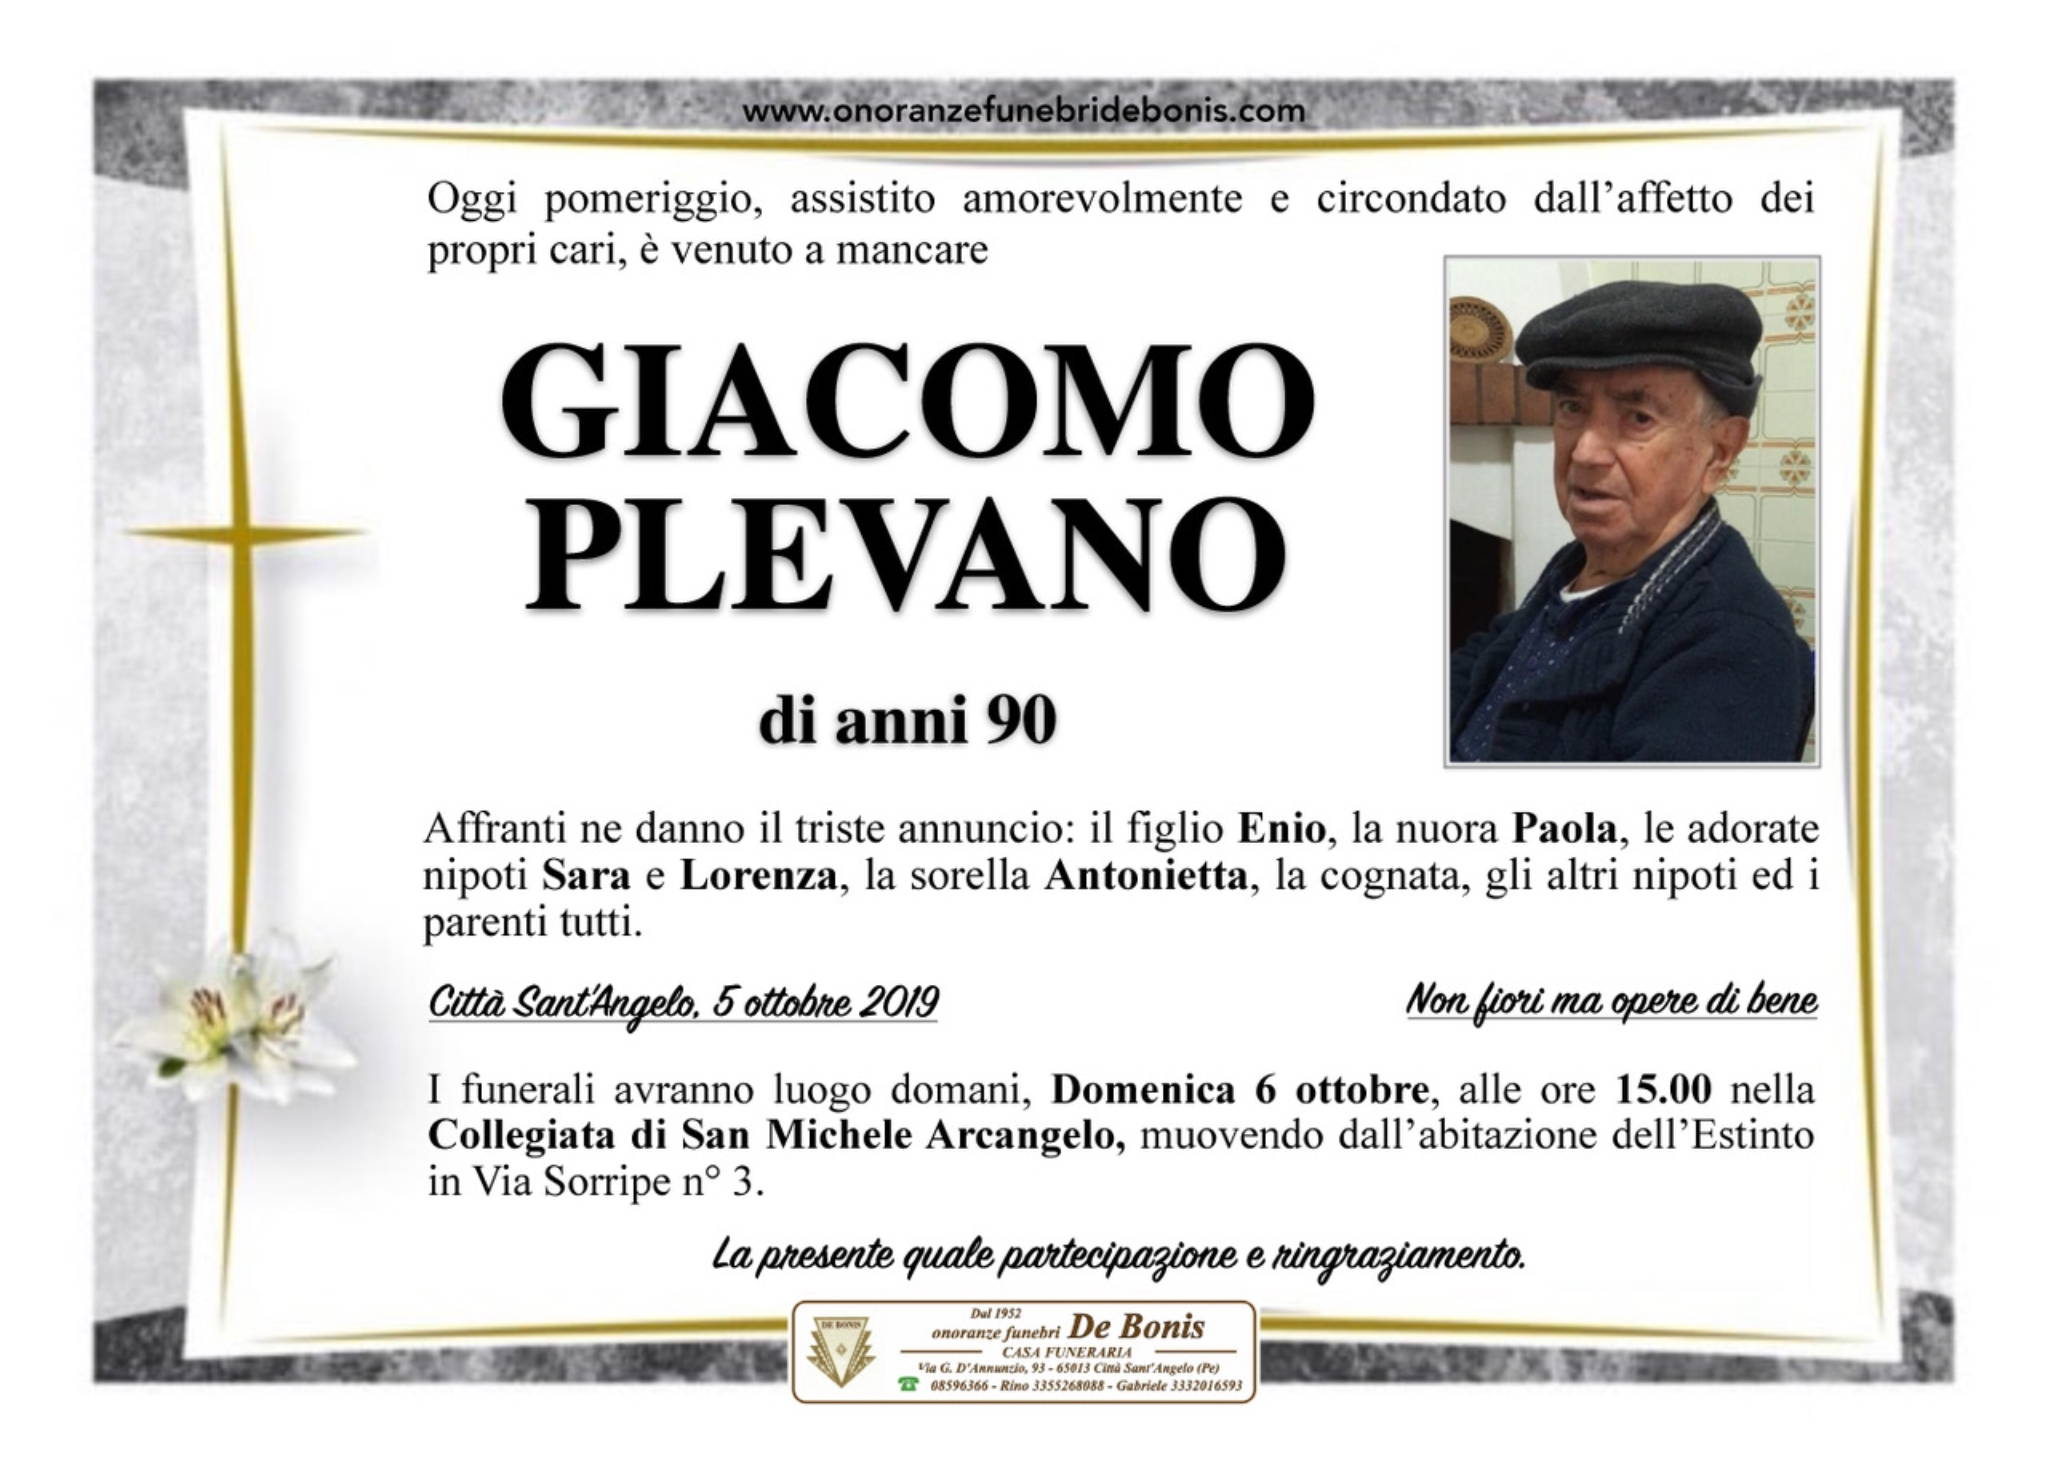 Giacomo Plevano